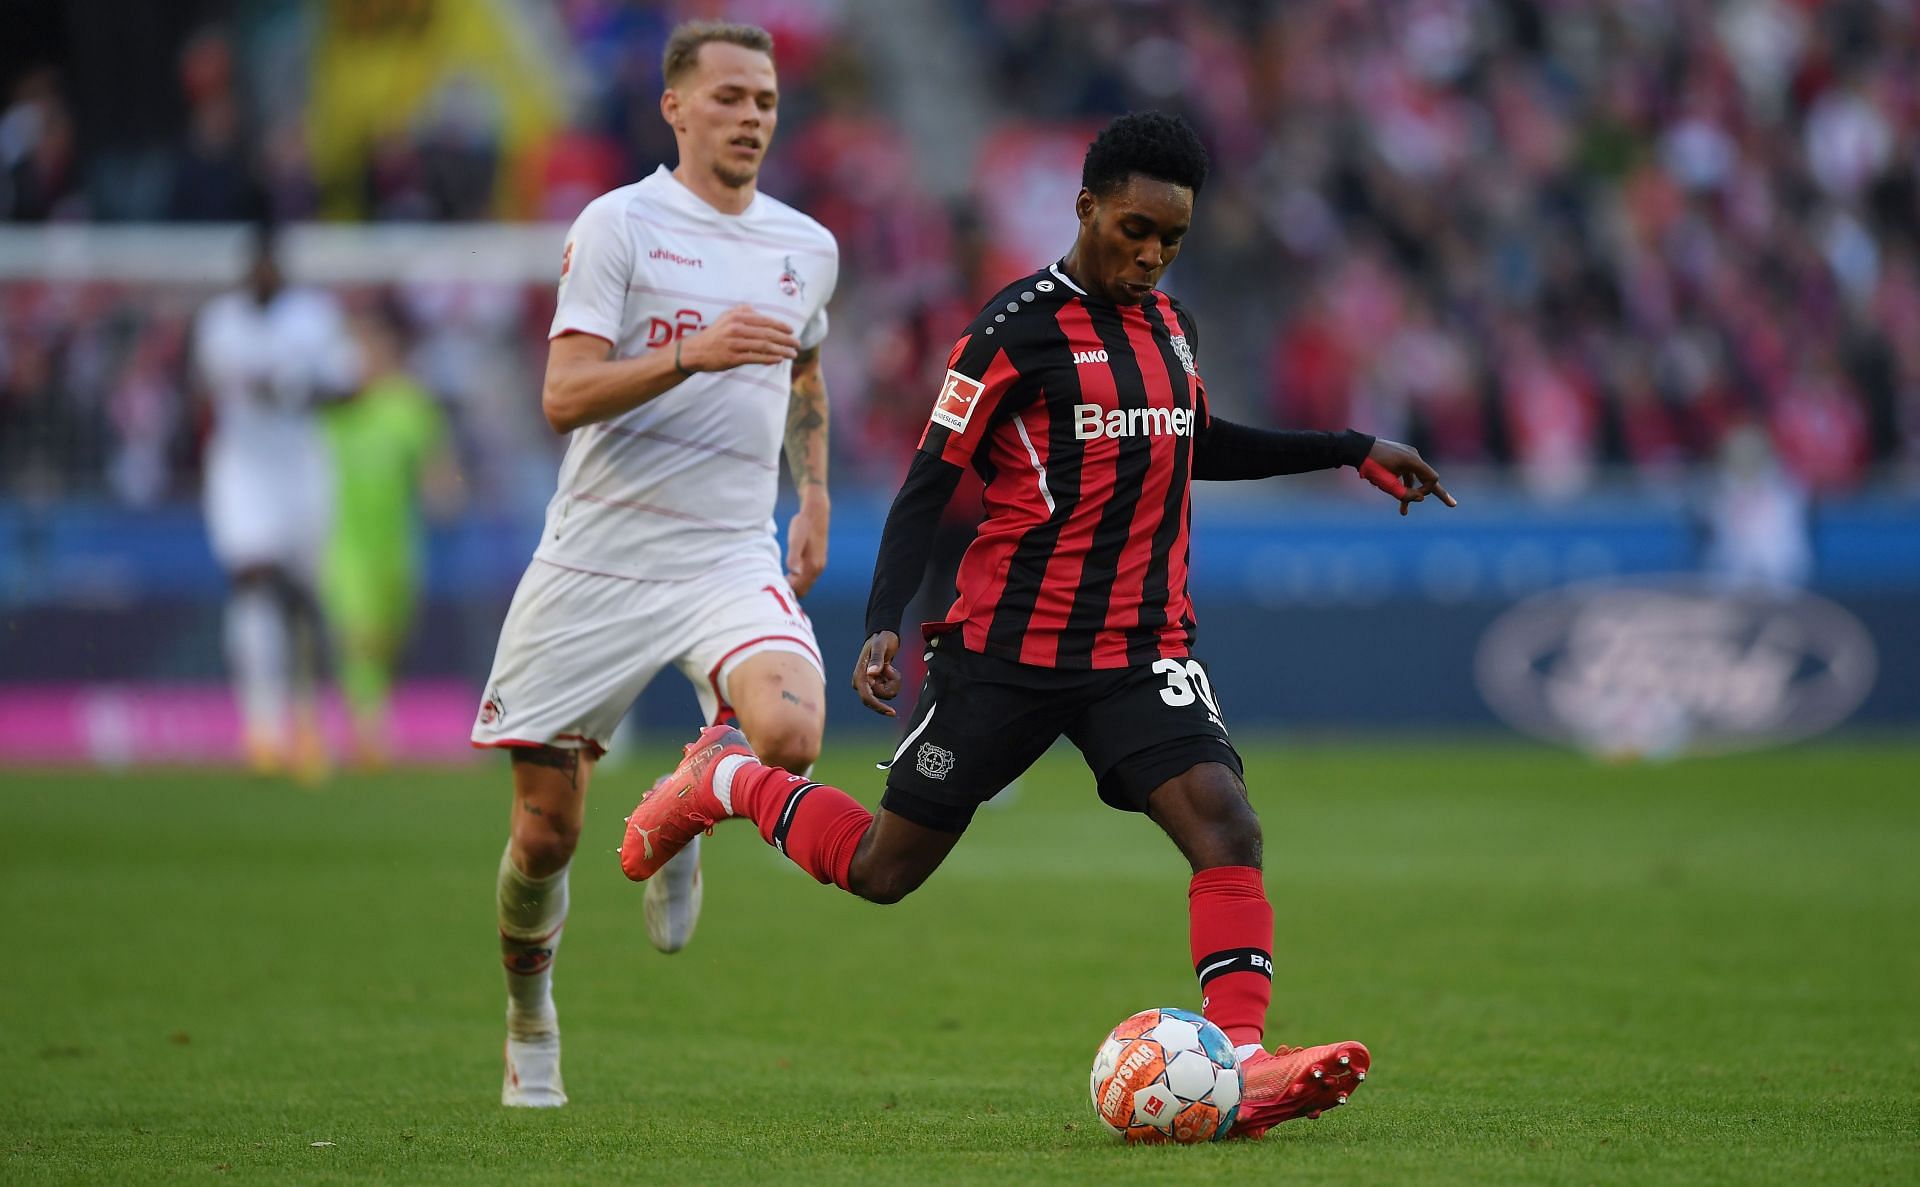 Bayer Leverkusen host Koln in the Bundesliga on Sunday.